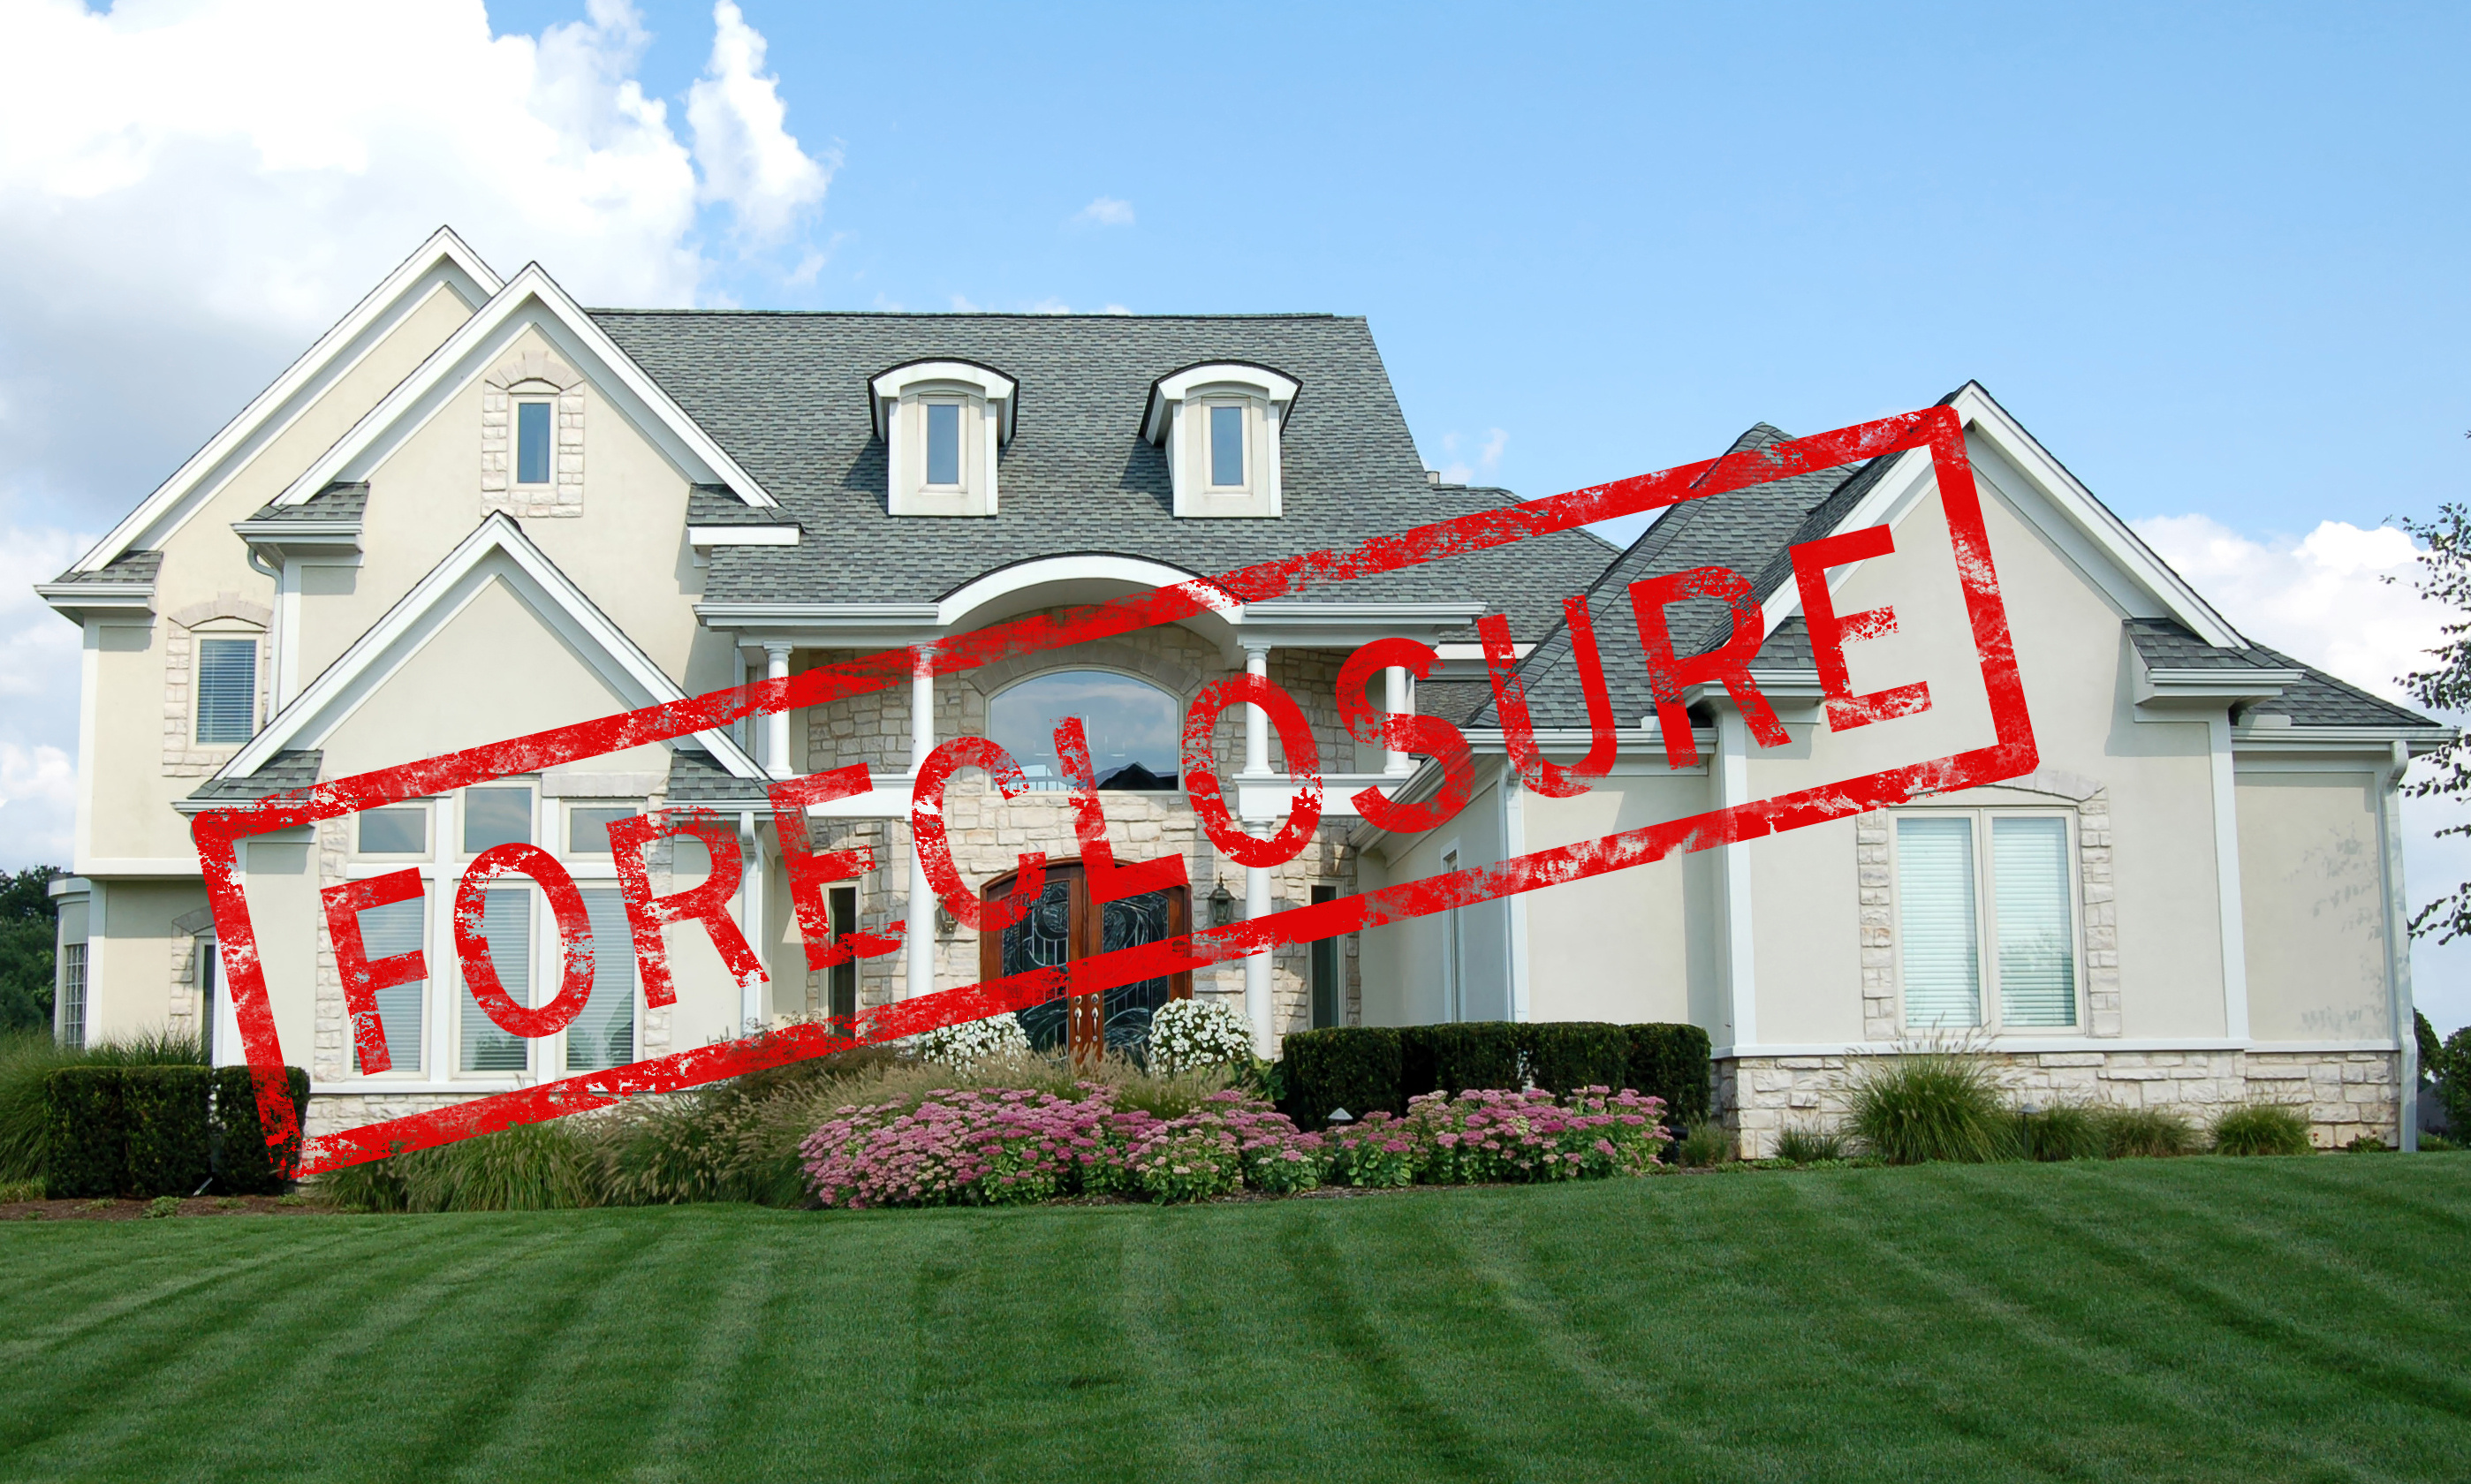 Call Absolute Appraisals, LLC to discuss appraisals regarding Charlottesville City foreclosures